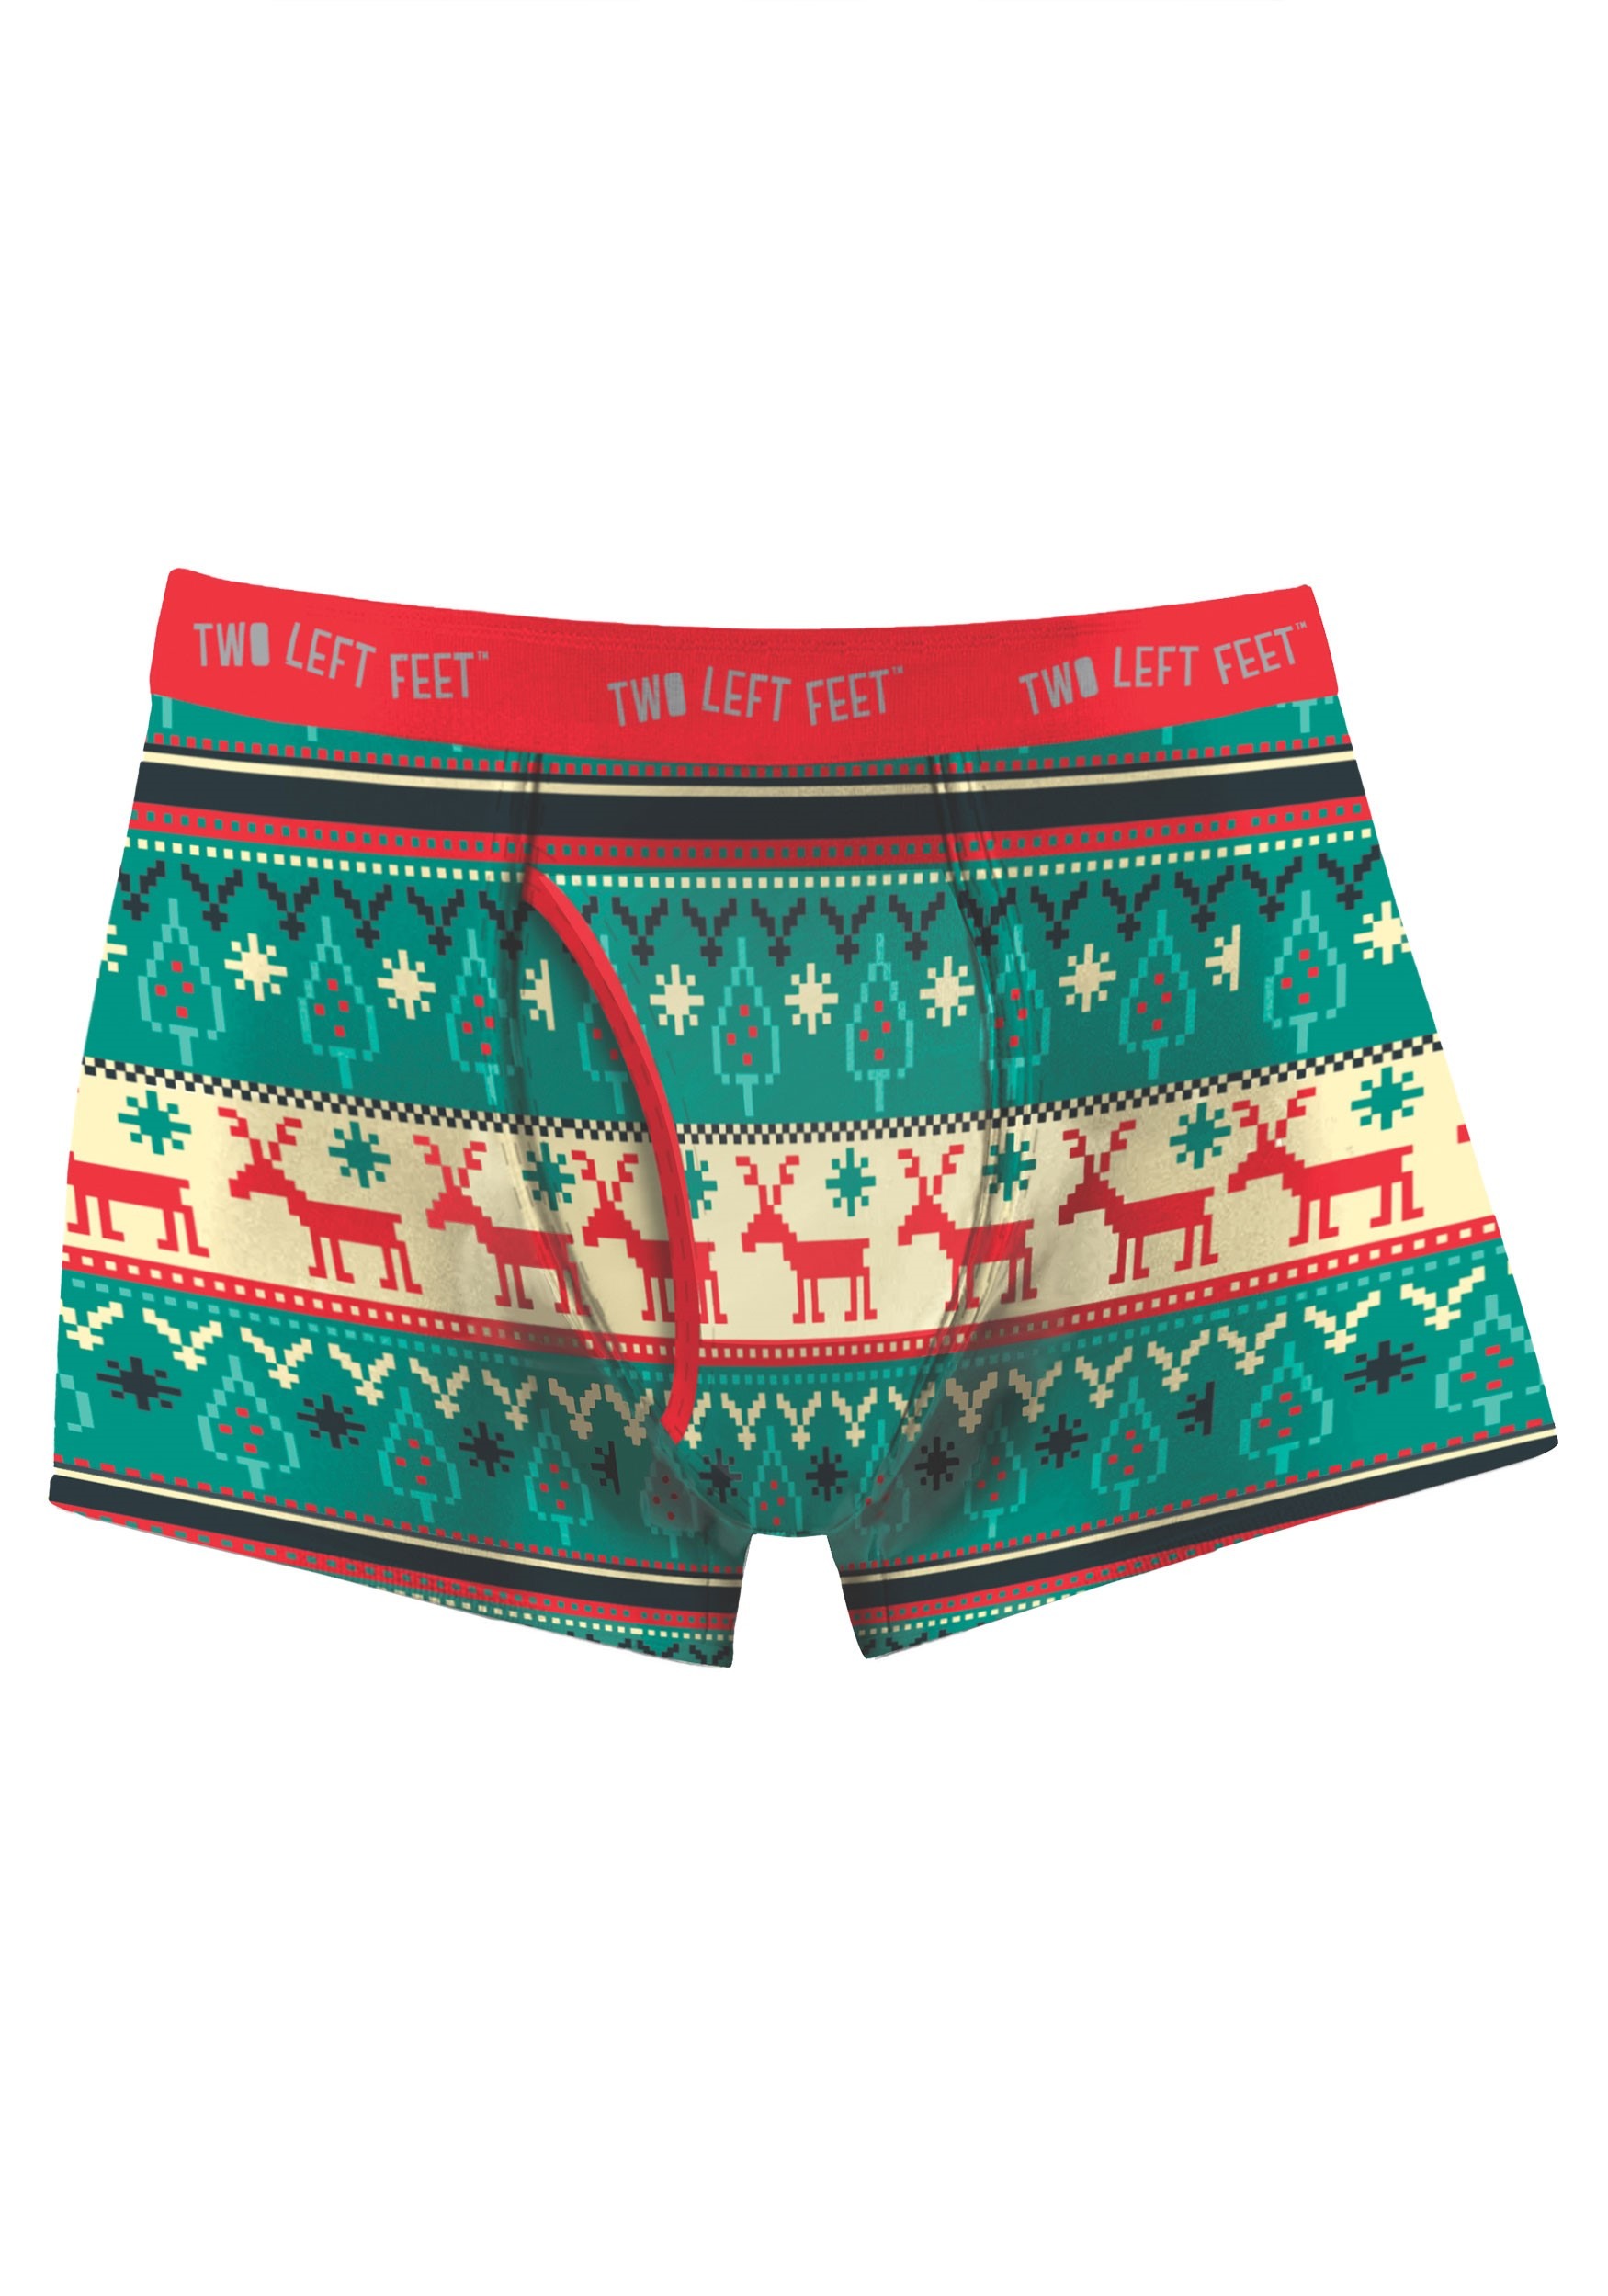 Christmas Mens Trunk Boxer Brief Underwear Two Left Feet Reindeer Xing